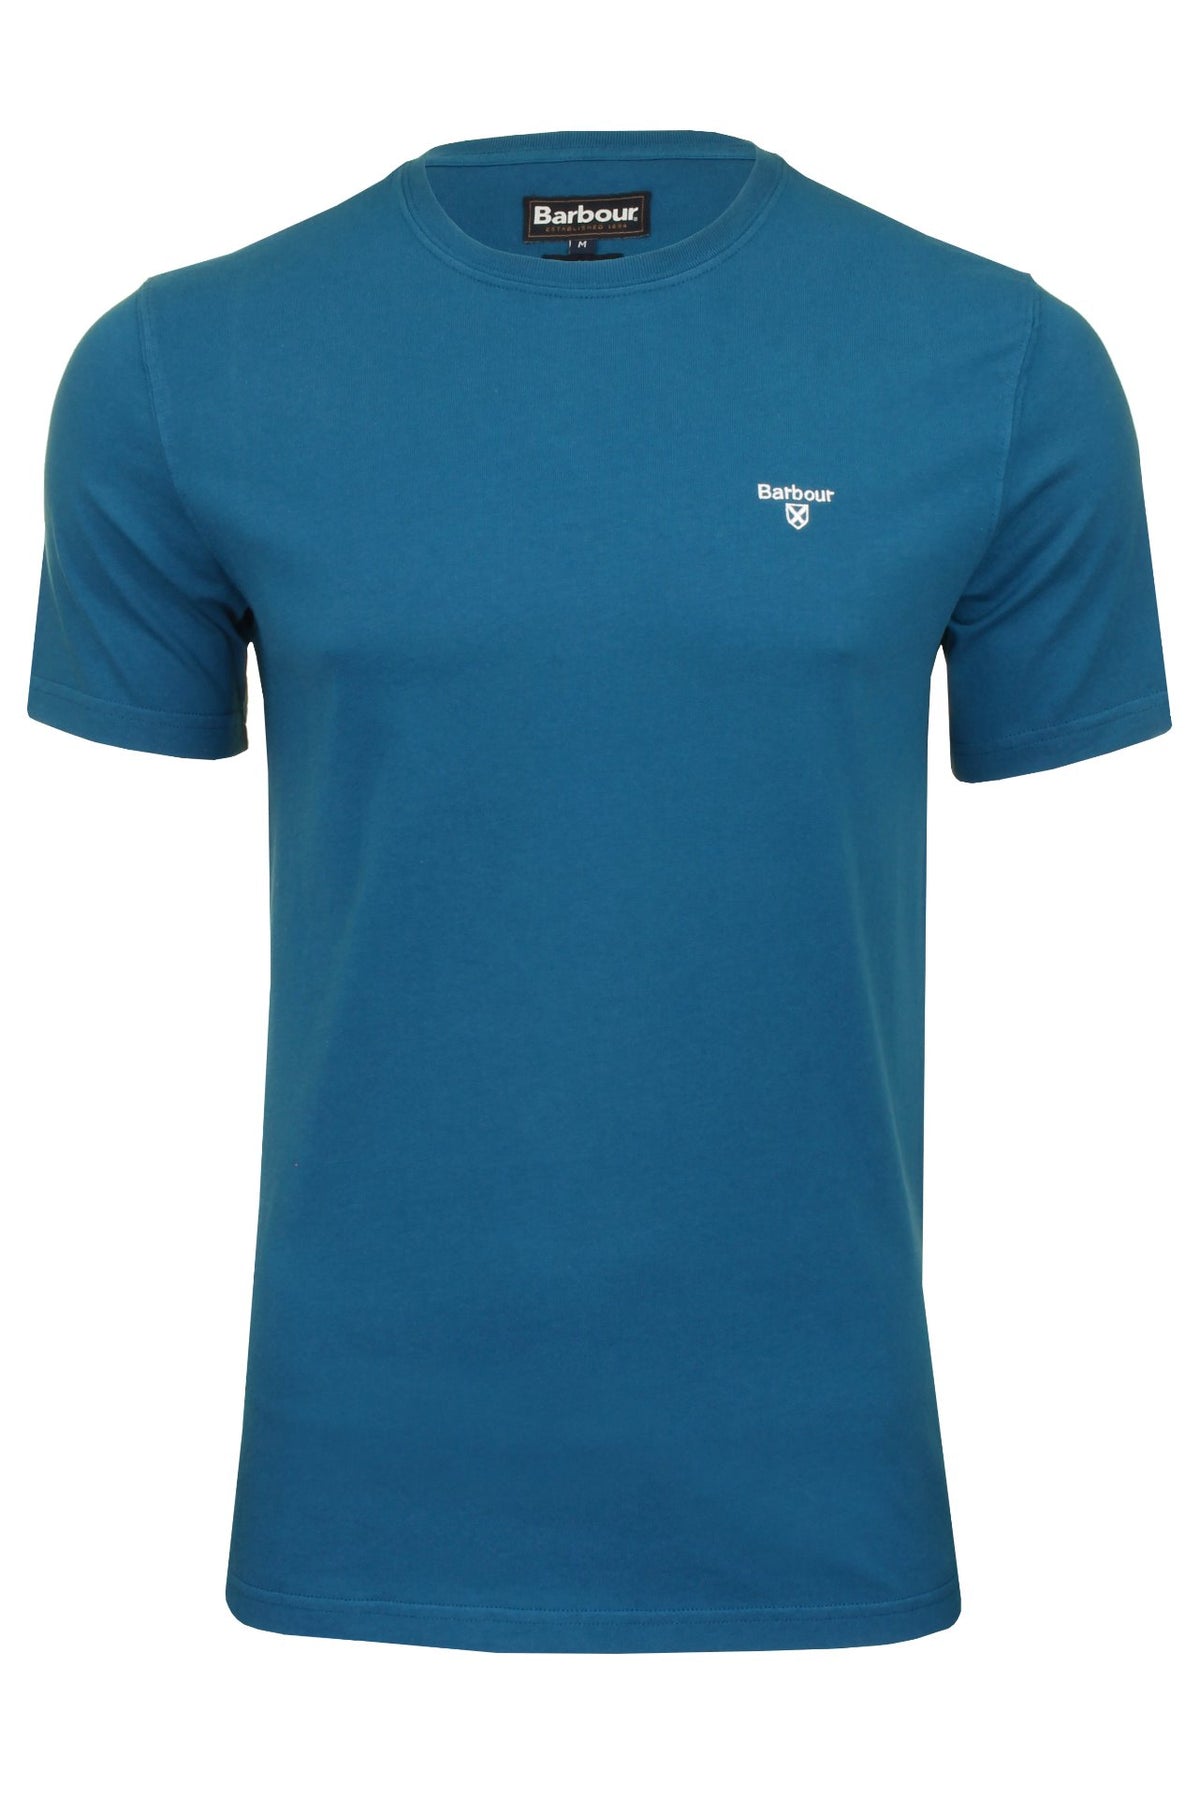 Barbour Men's Sports T-Shirt - Short Sleeved, 01, Mts0331, Lyons Blue